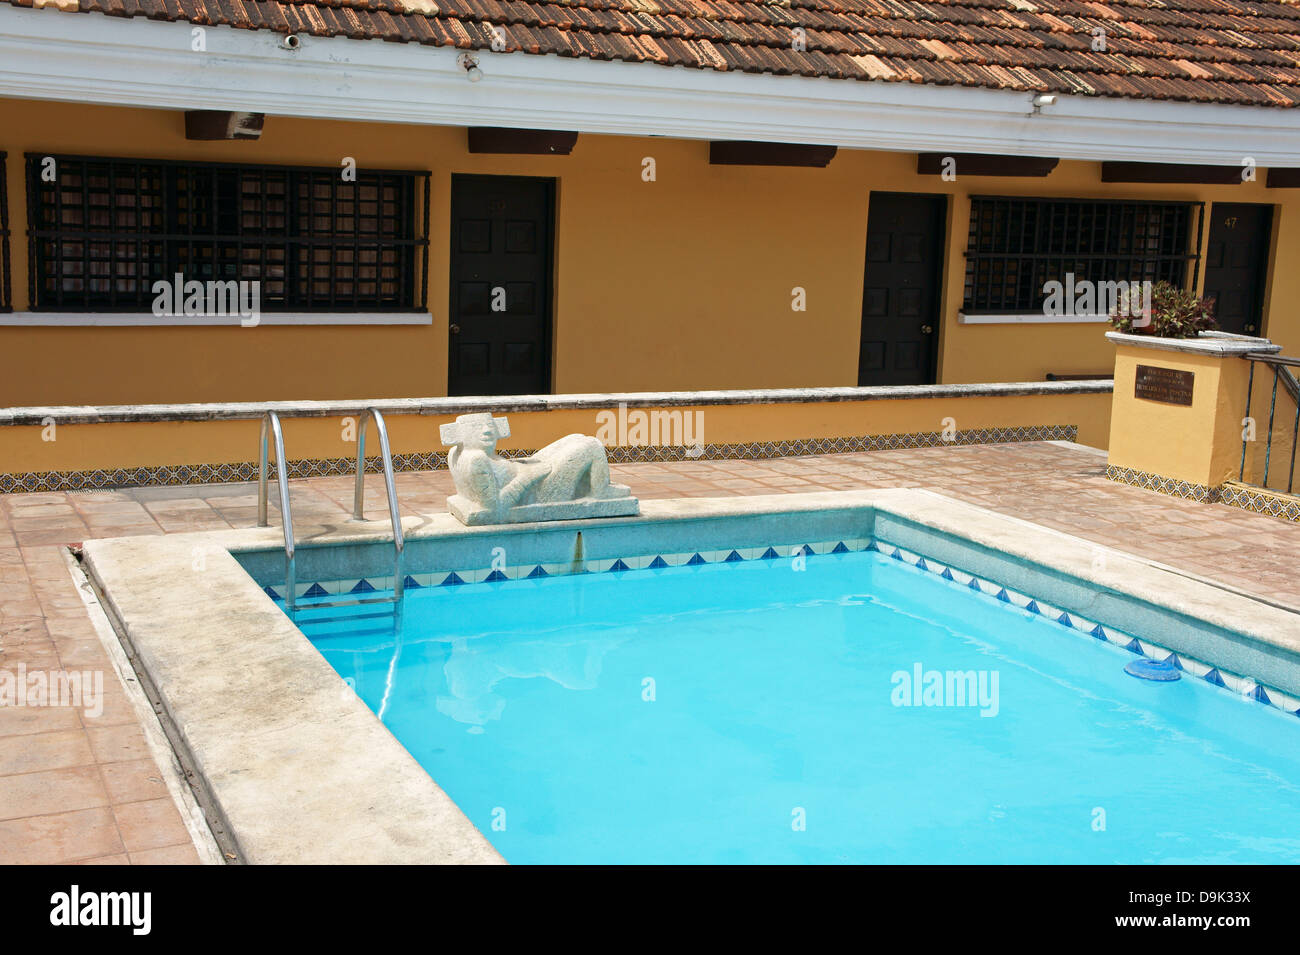 Mayan Chacmool sculpture and rooftop swimming pool at the Hotel Caribe, Merida, Yucatan, Mexico Stock Photo